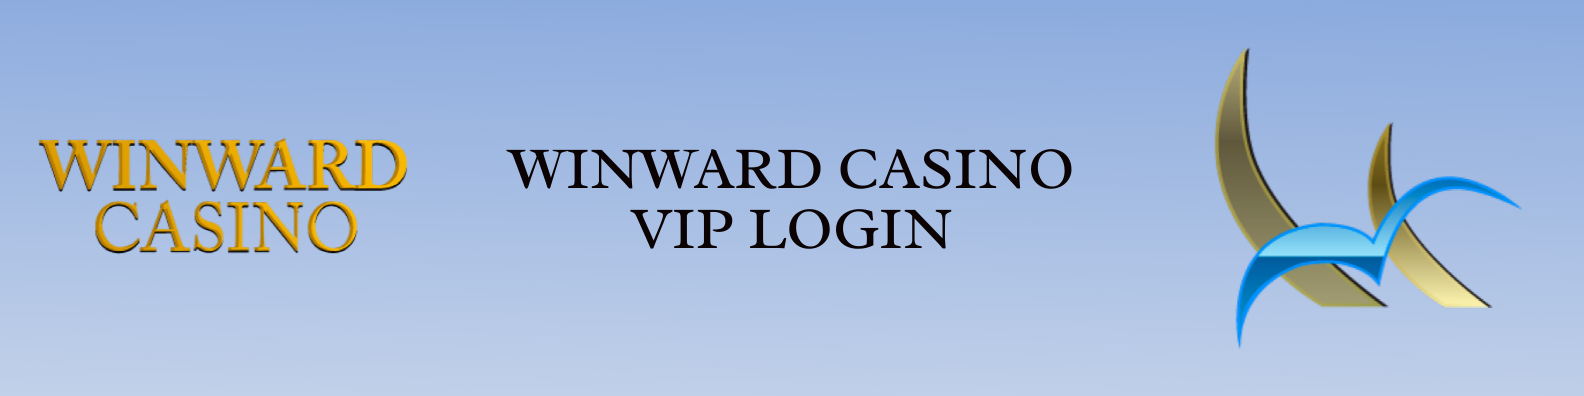 Winward Casino VIP Login